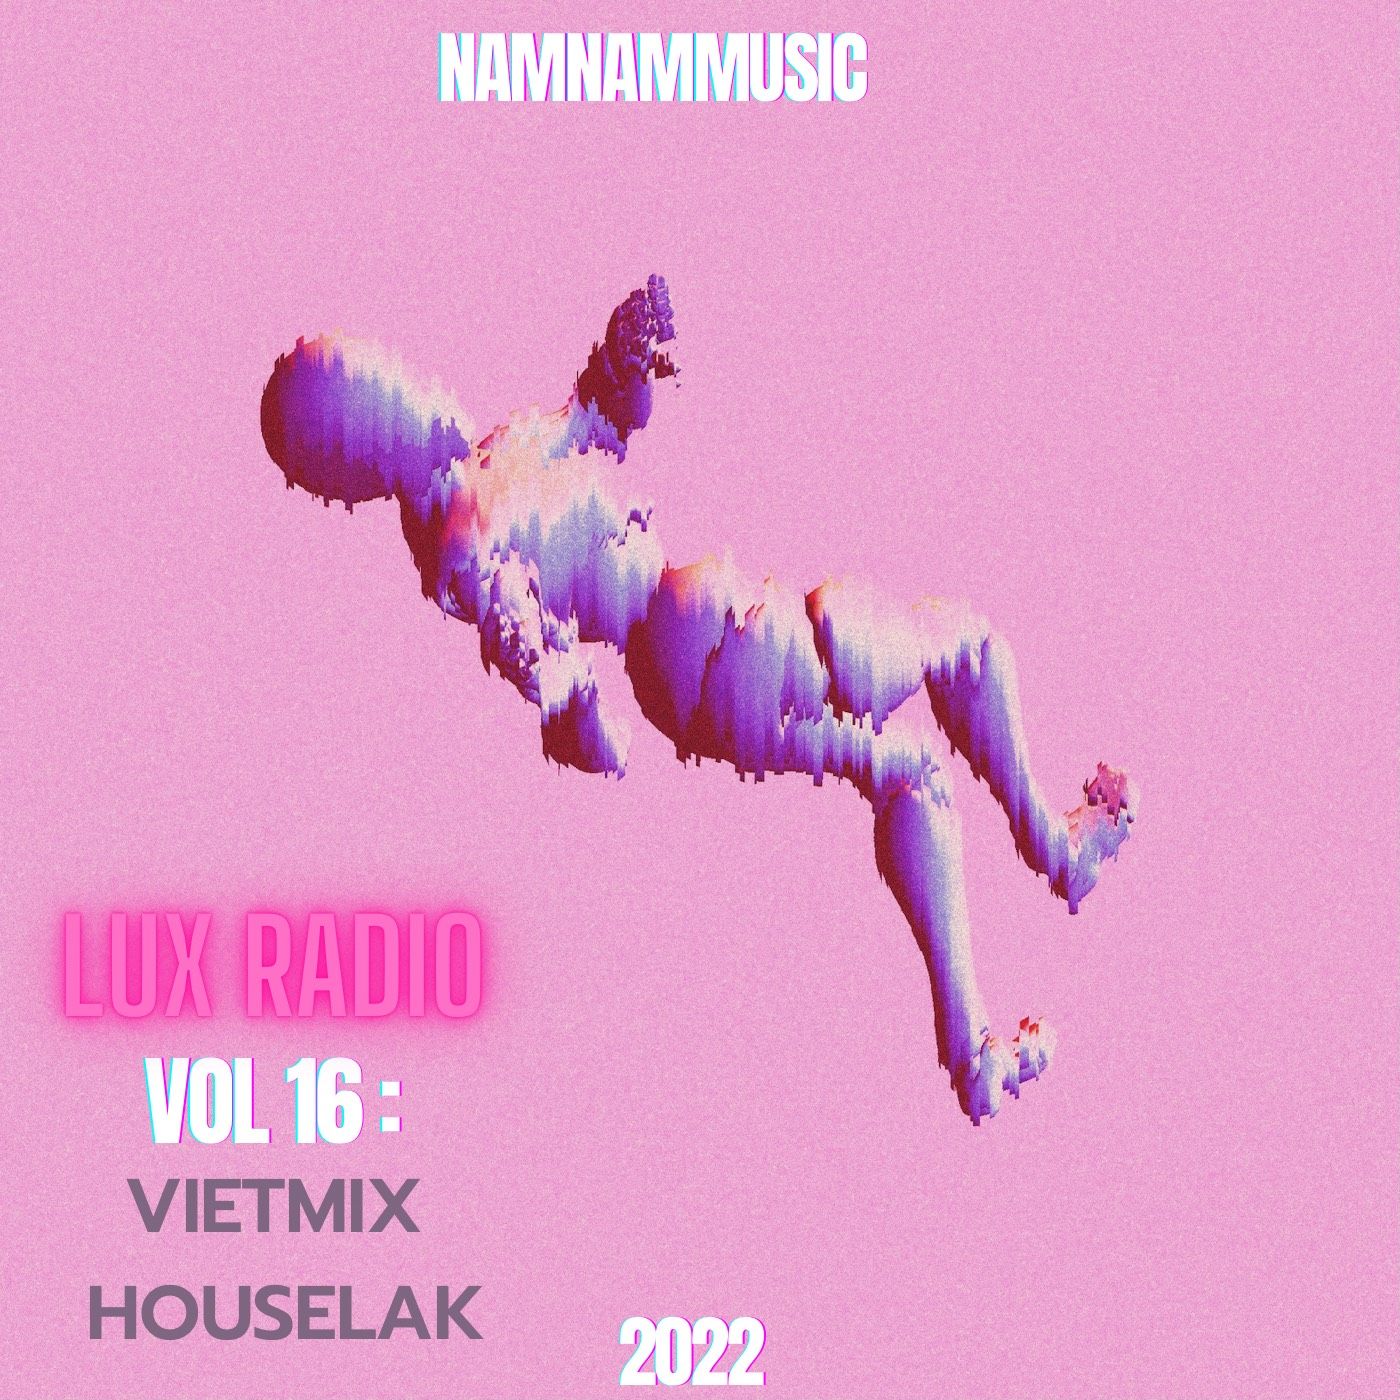 Ladata | NAMNAMMUSIC |  LUX RADIO #16 : VIETMIX HOUSELAK 2022 |